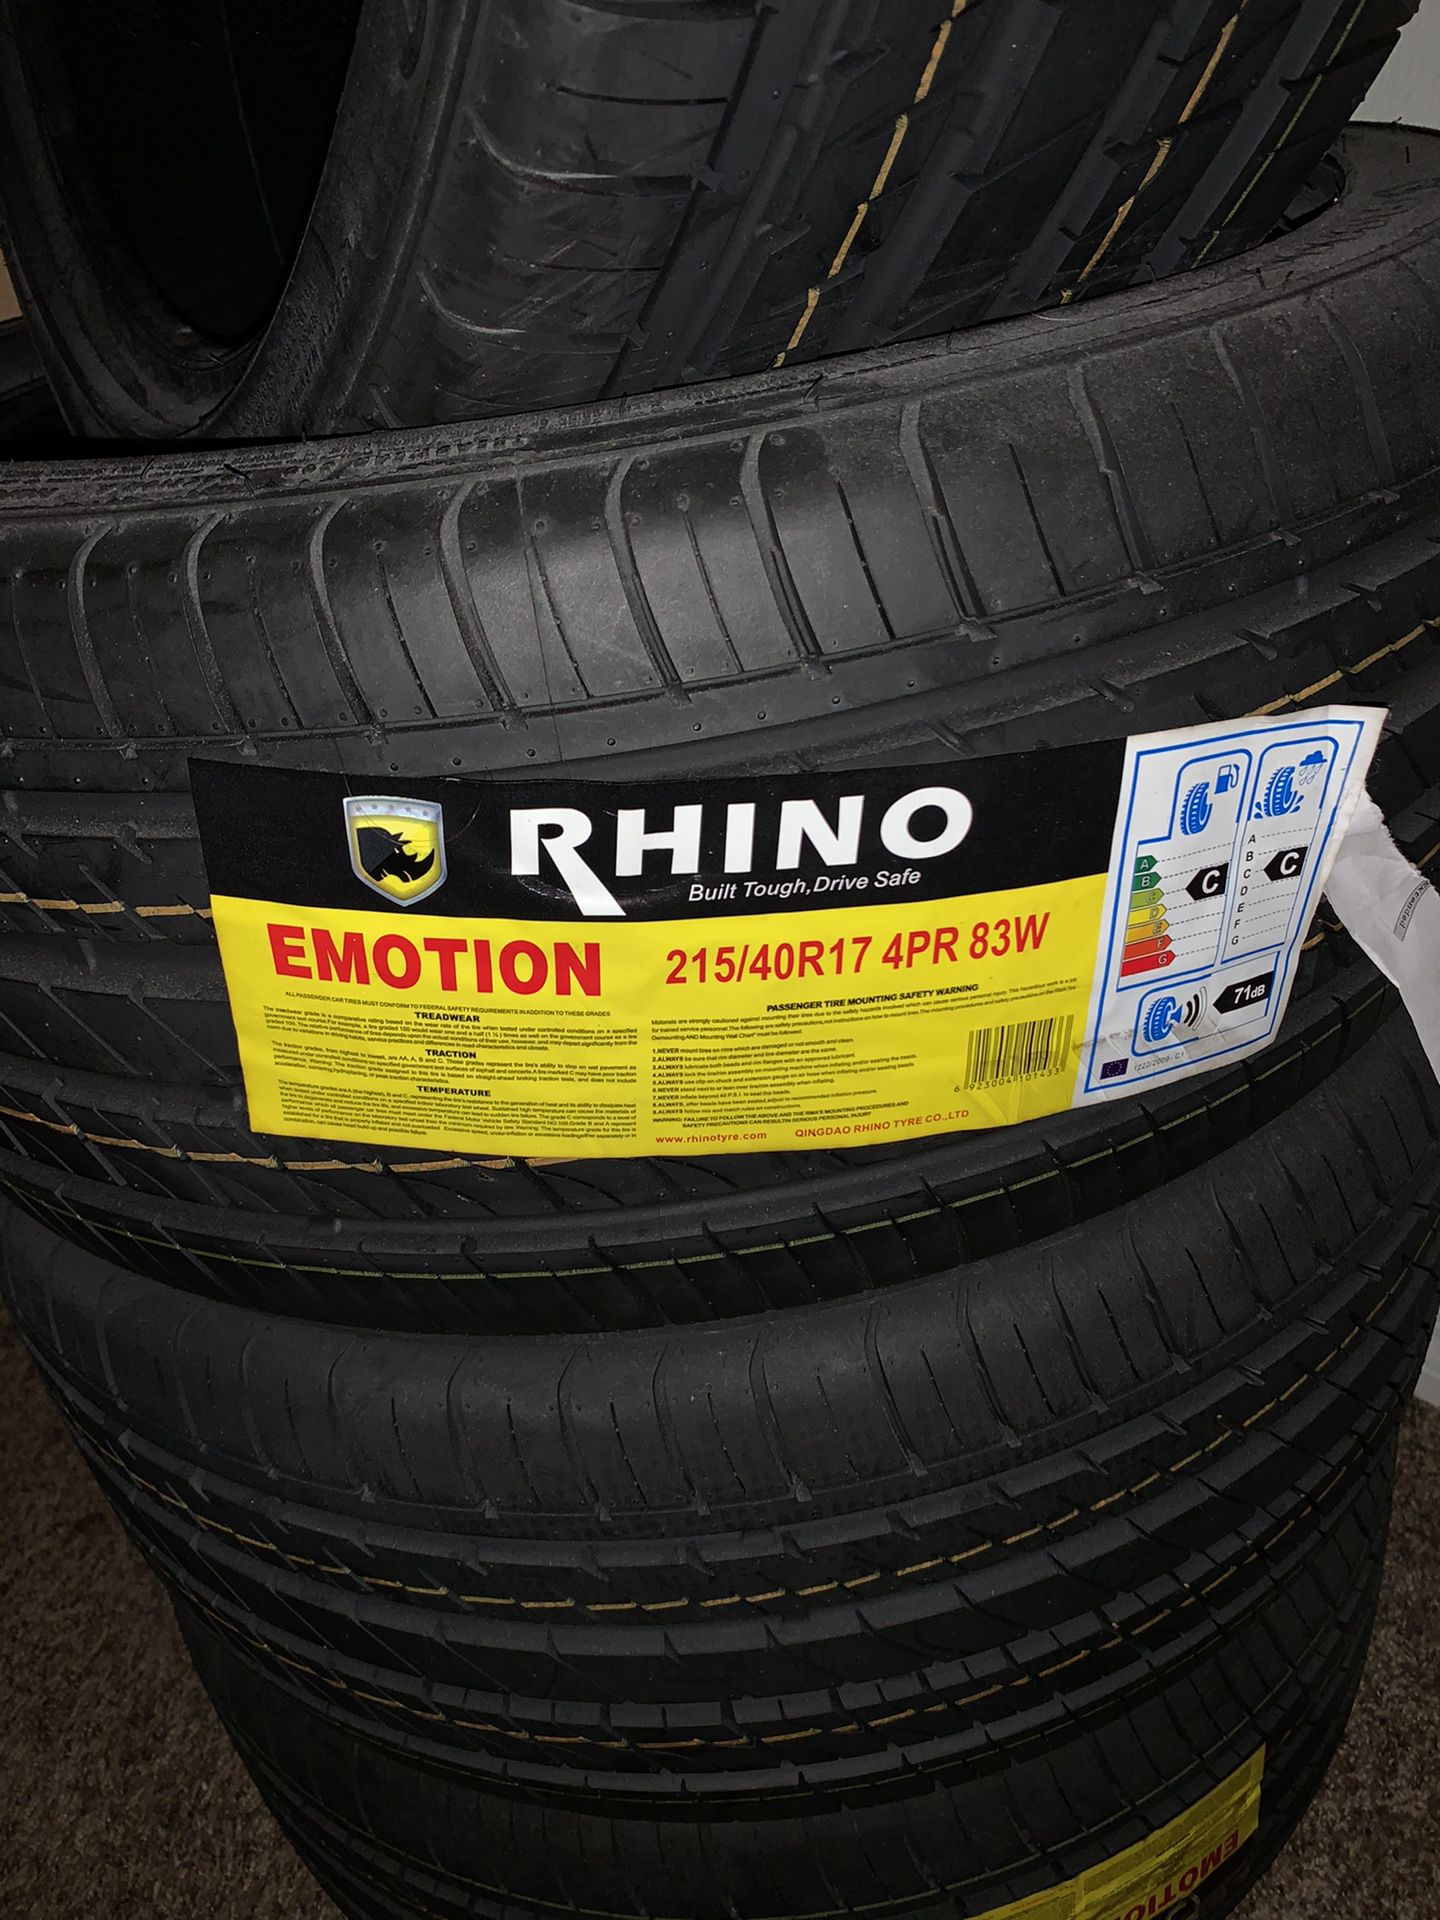 JNC rims and Rhino tires